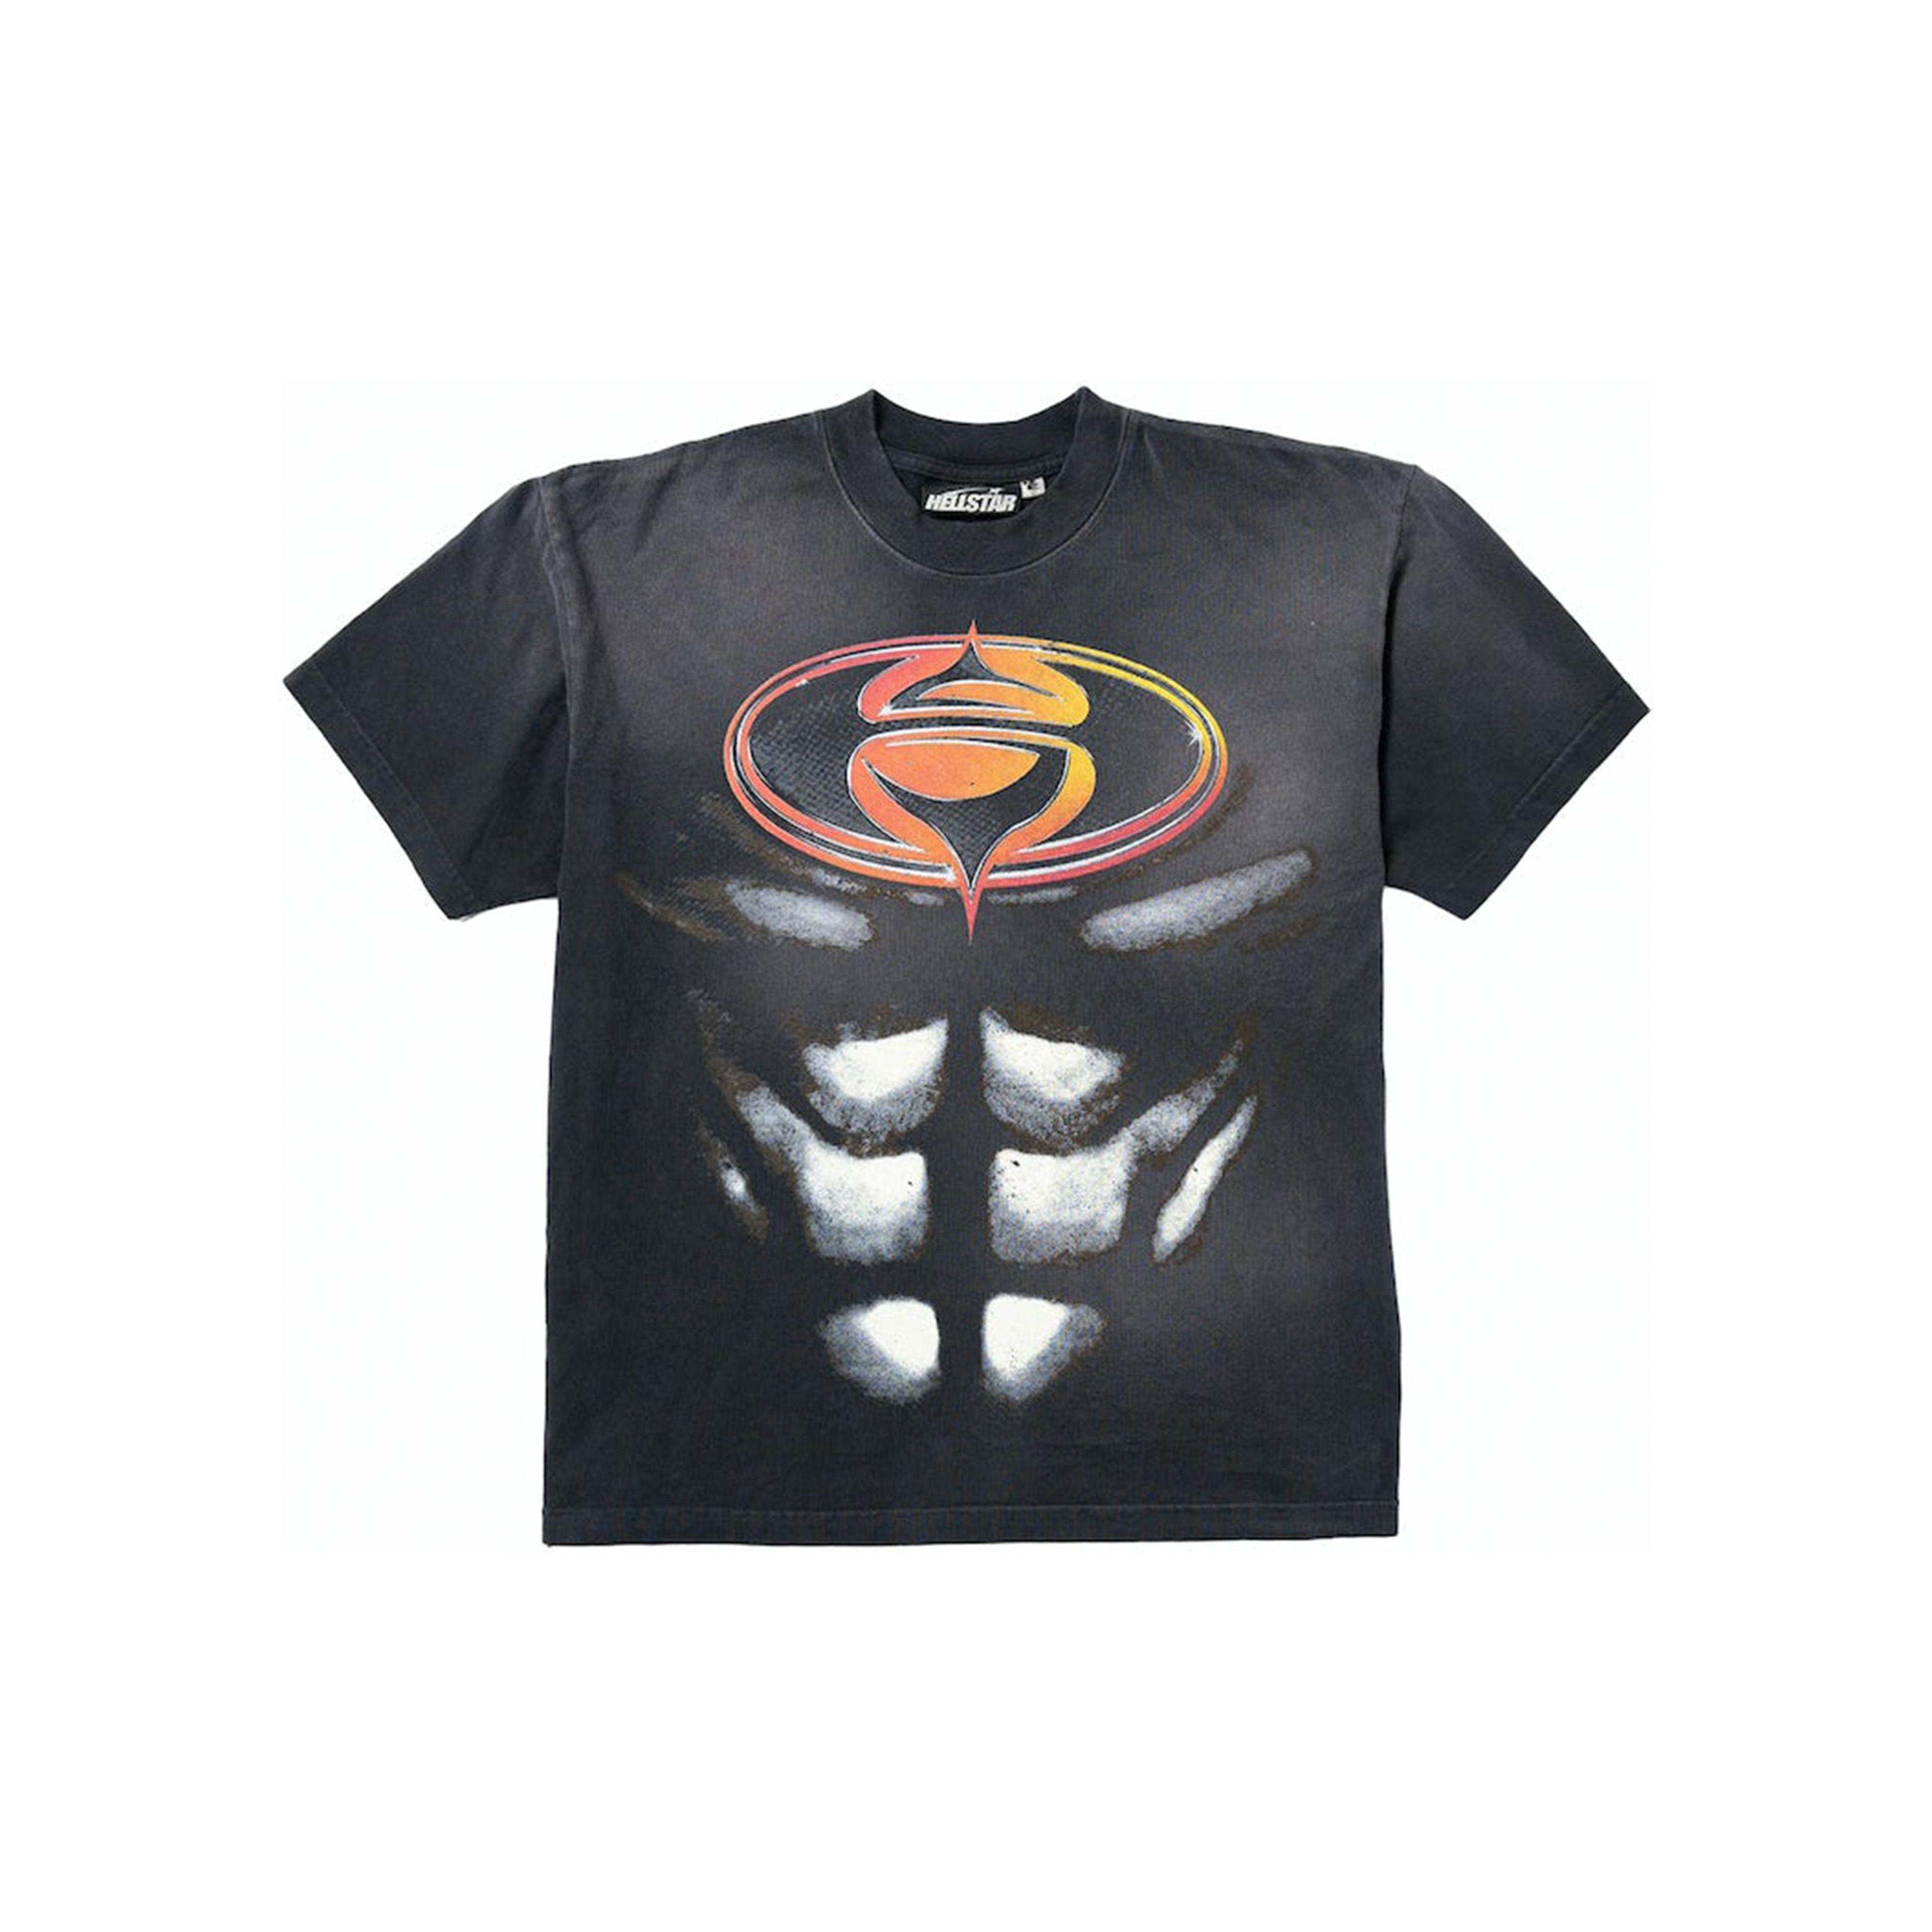 Hellstar Superhero T-shirt Black